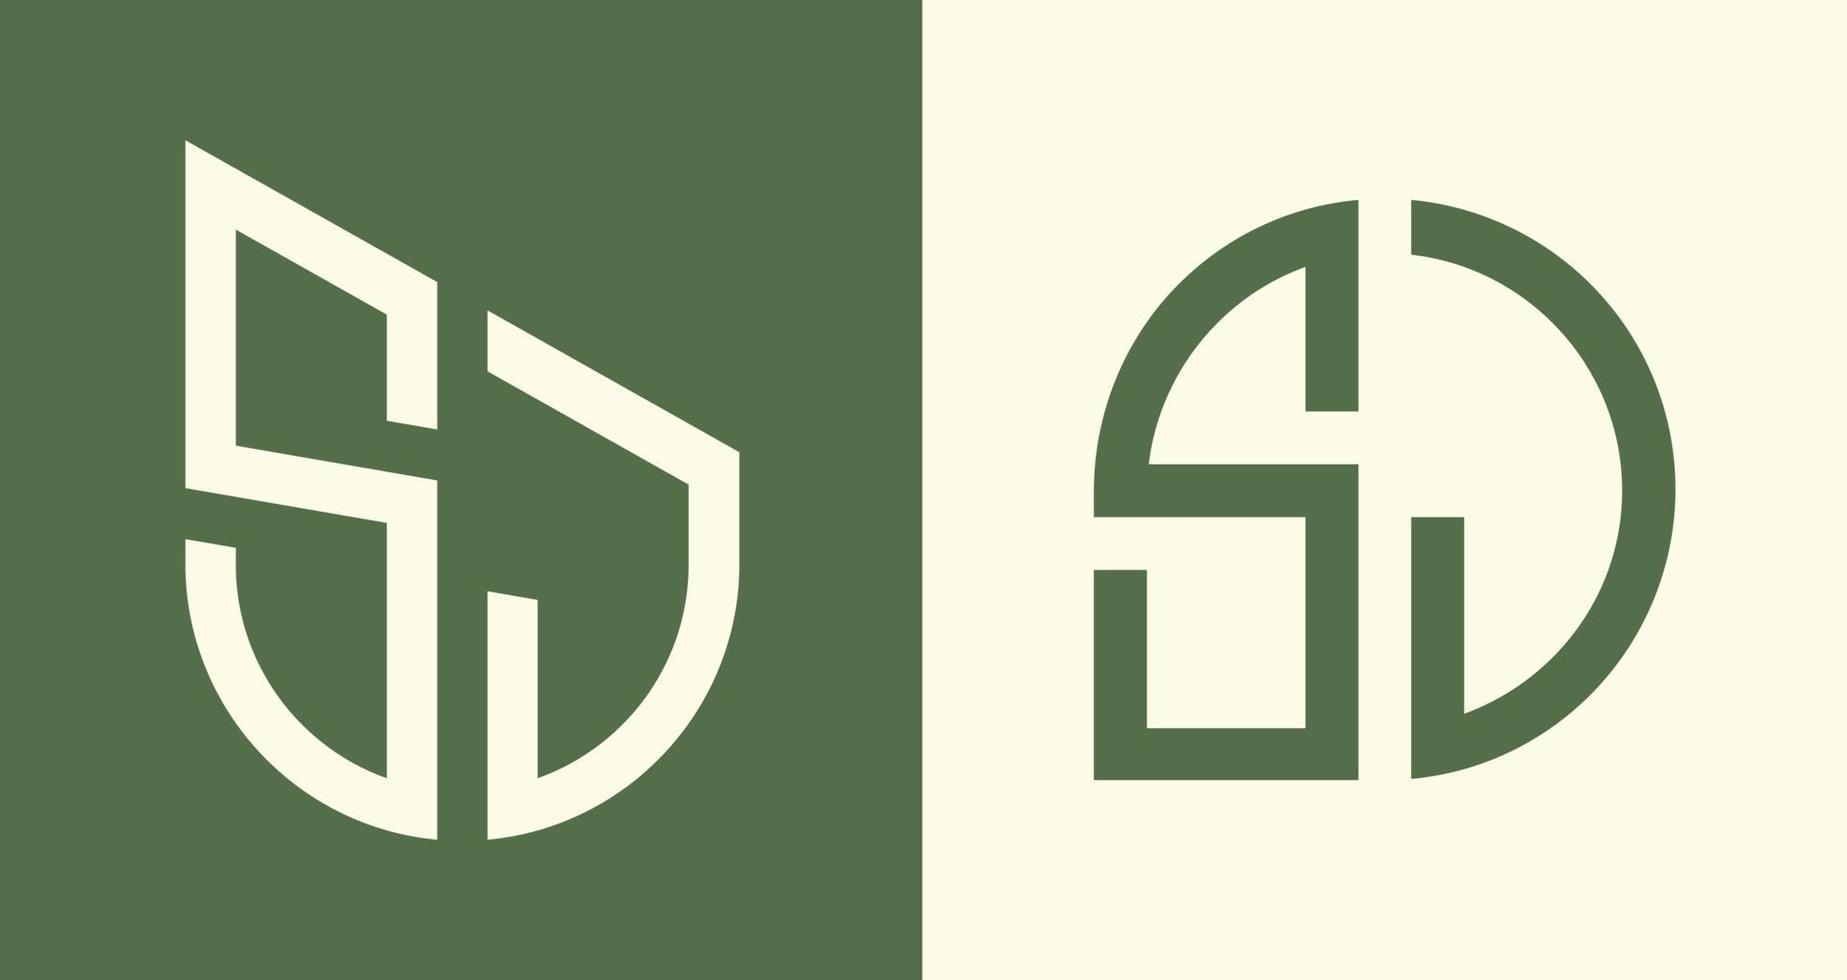 kreative einfache anfangsbuchstaben sj logo designs Bundle. vektor